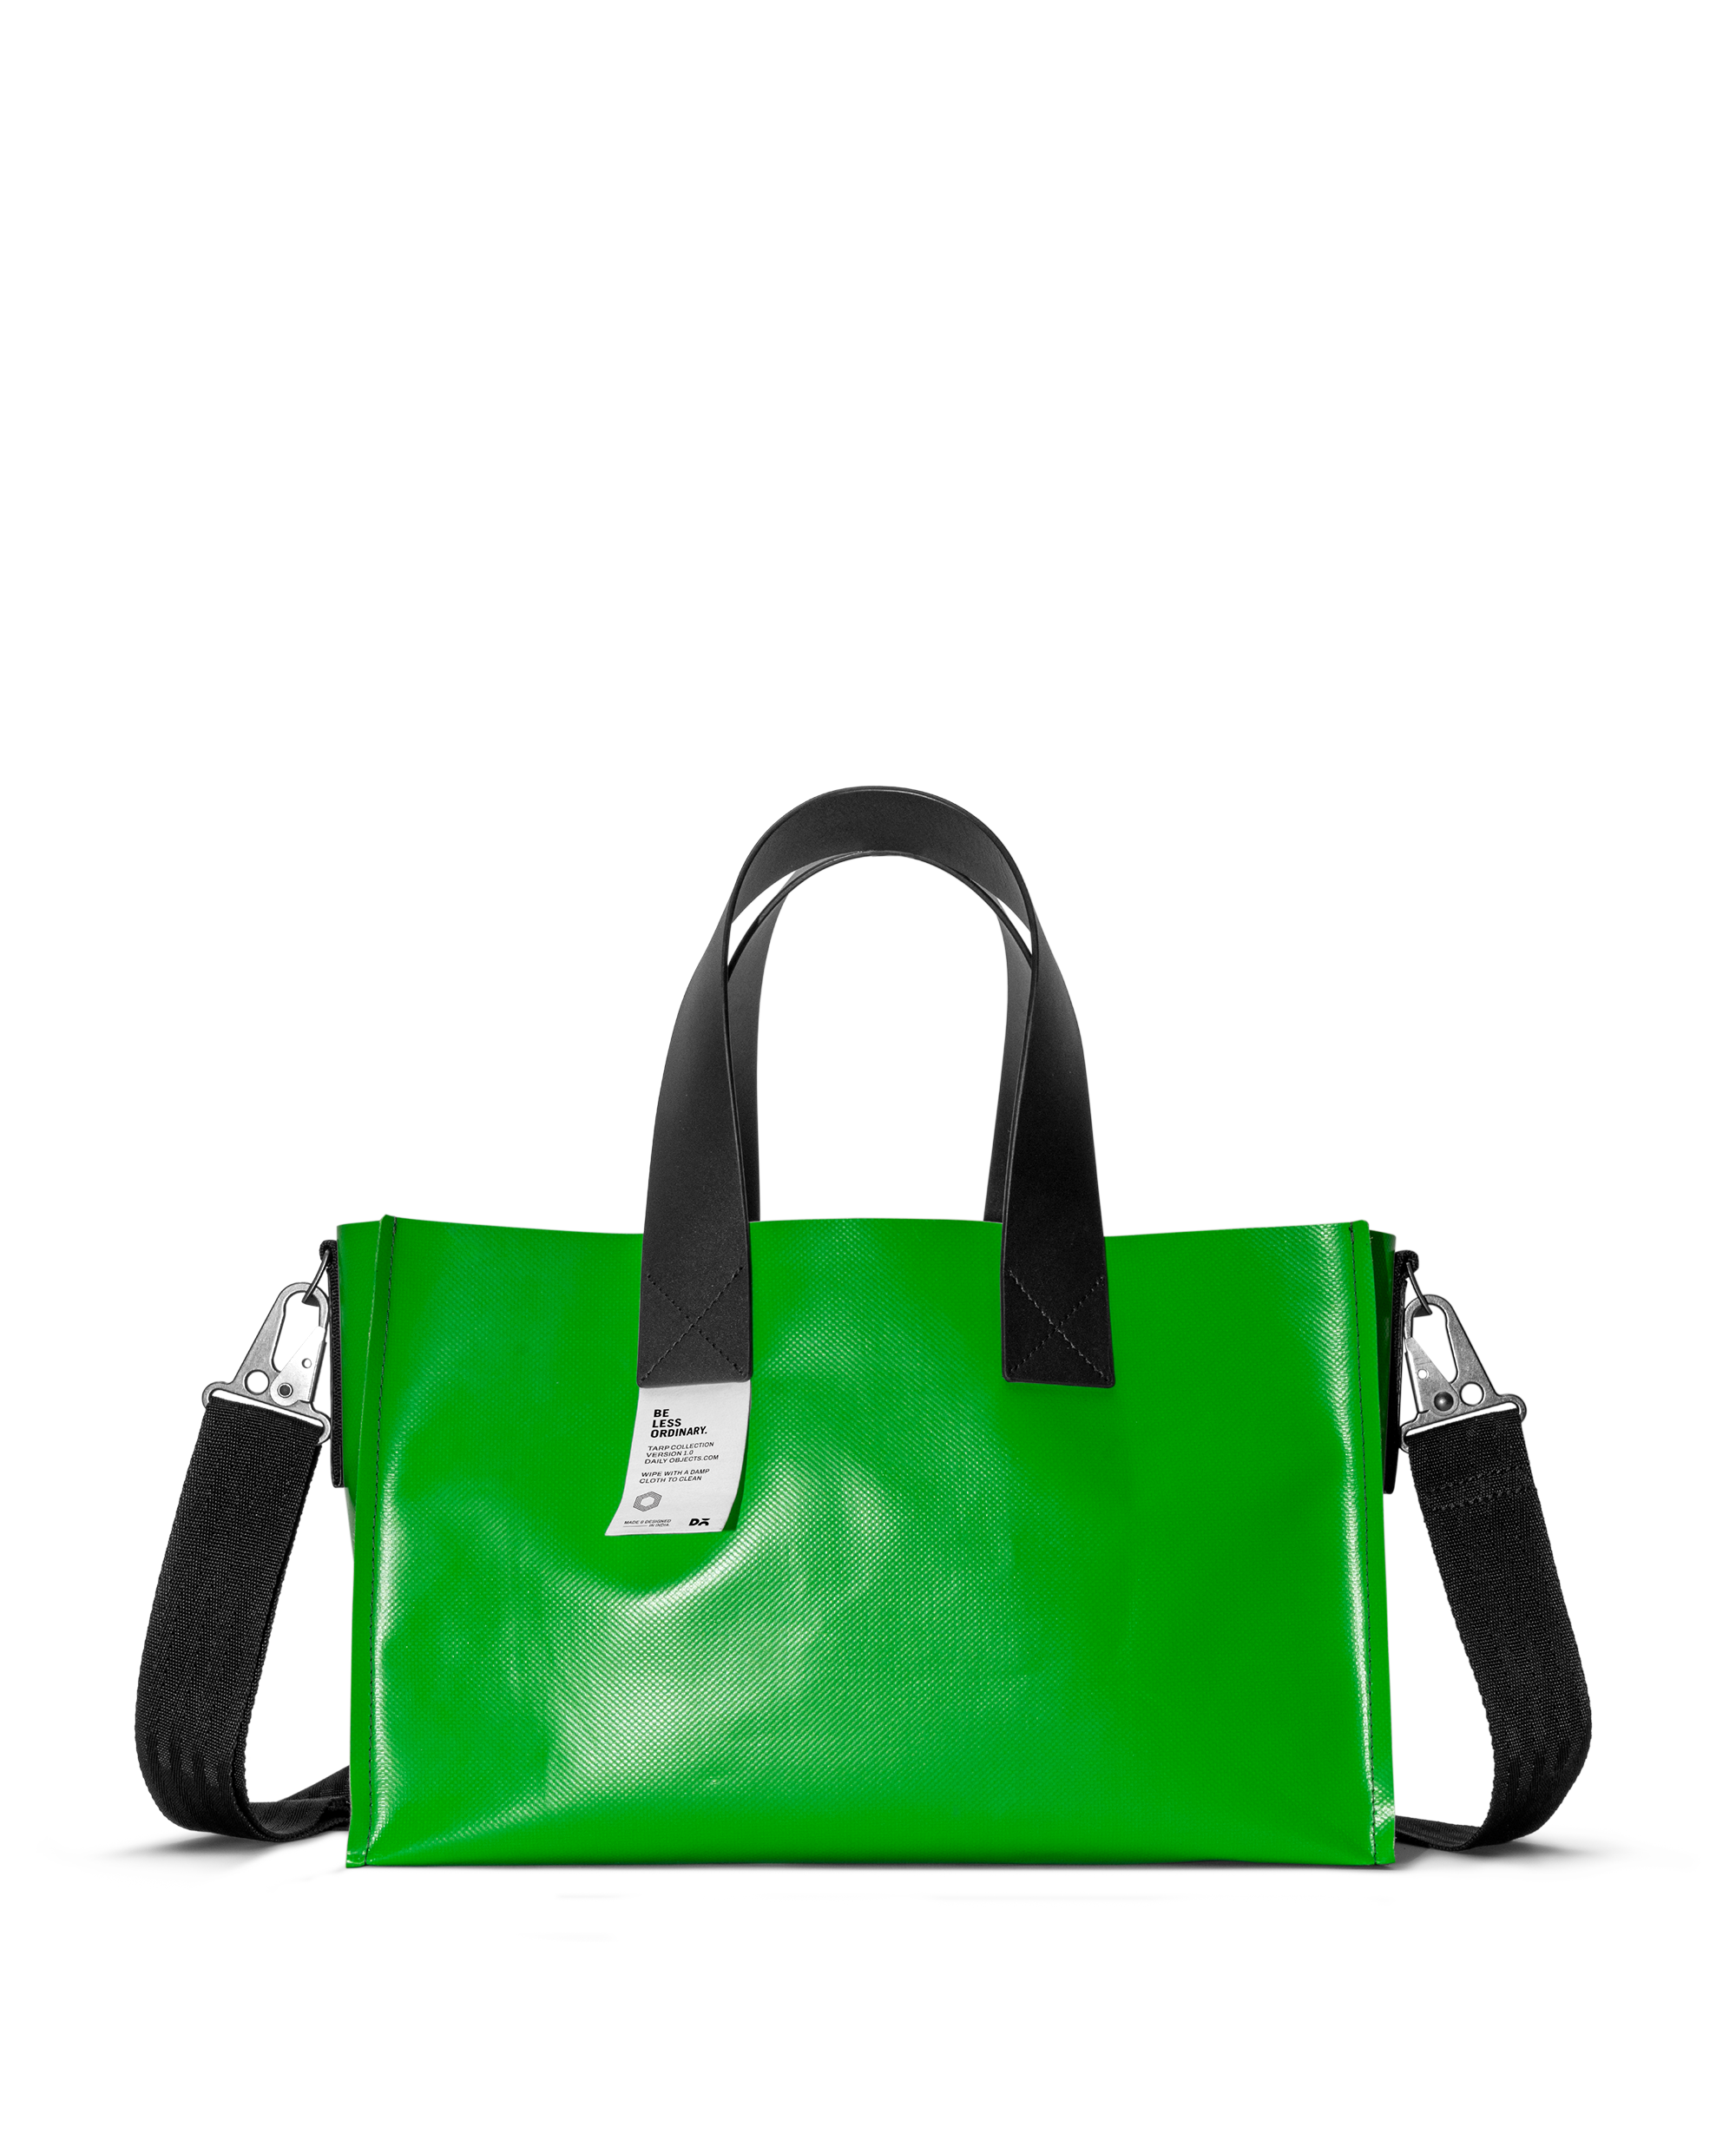 Amazon Handbag Haul | Trendy & Chic Handbags for College/ Office | DailyObjects  Handbags - YouTube